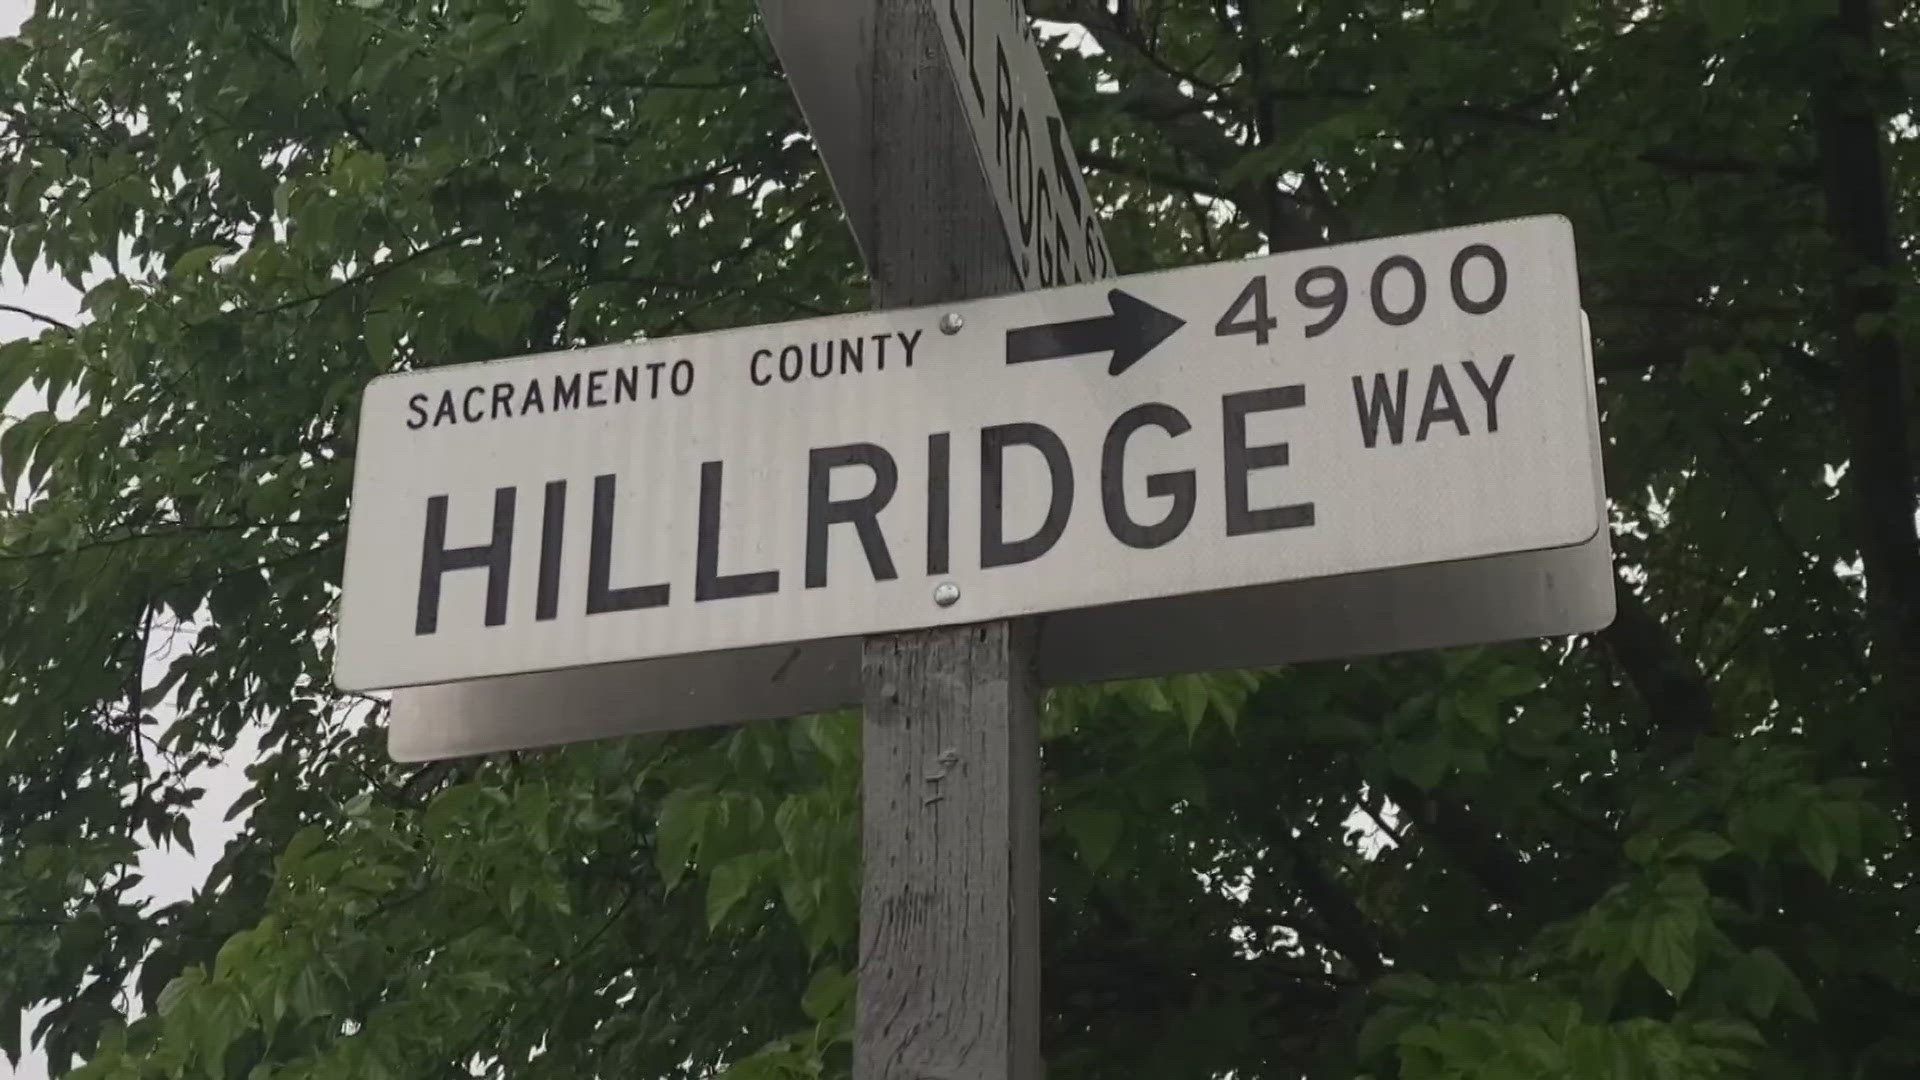 Deputies are investigating a shooting that happened along Hillridge Way in Fair Oaks.